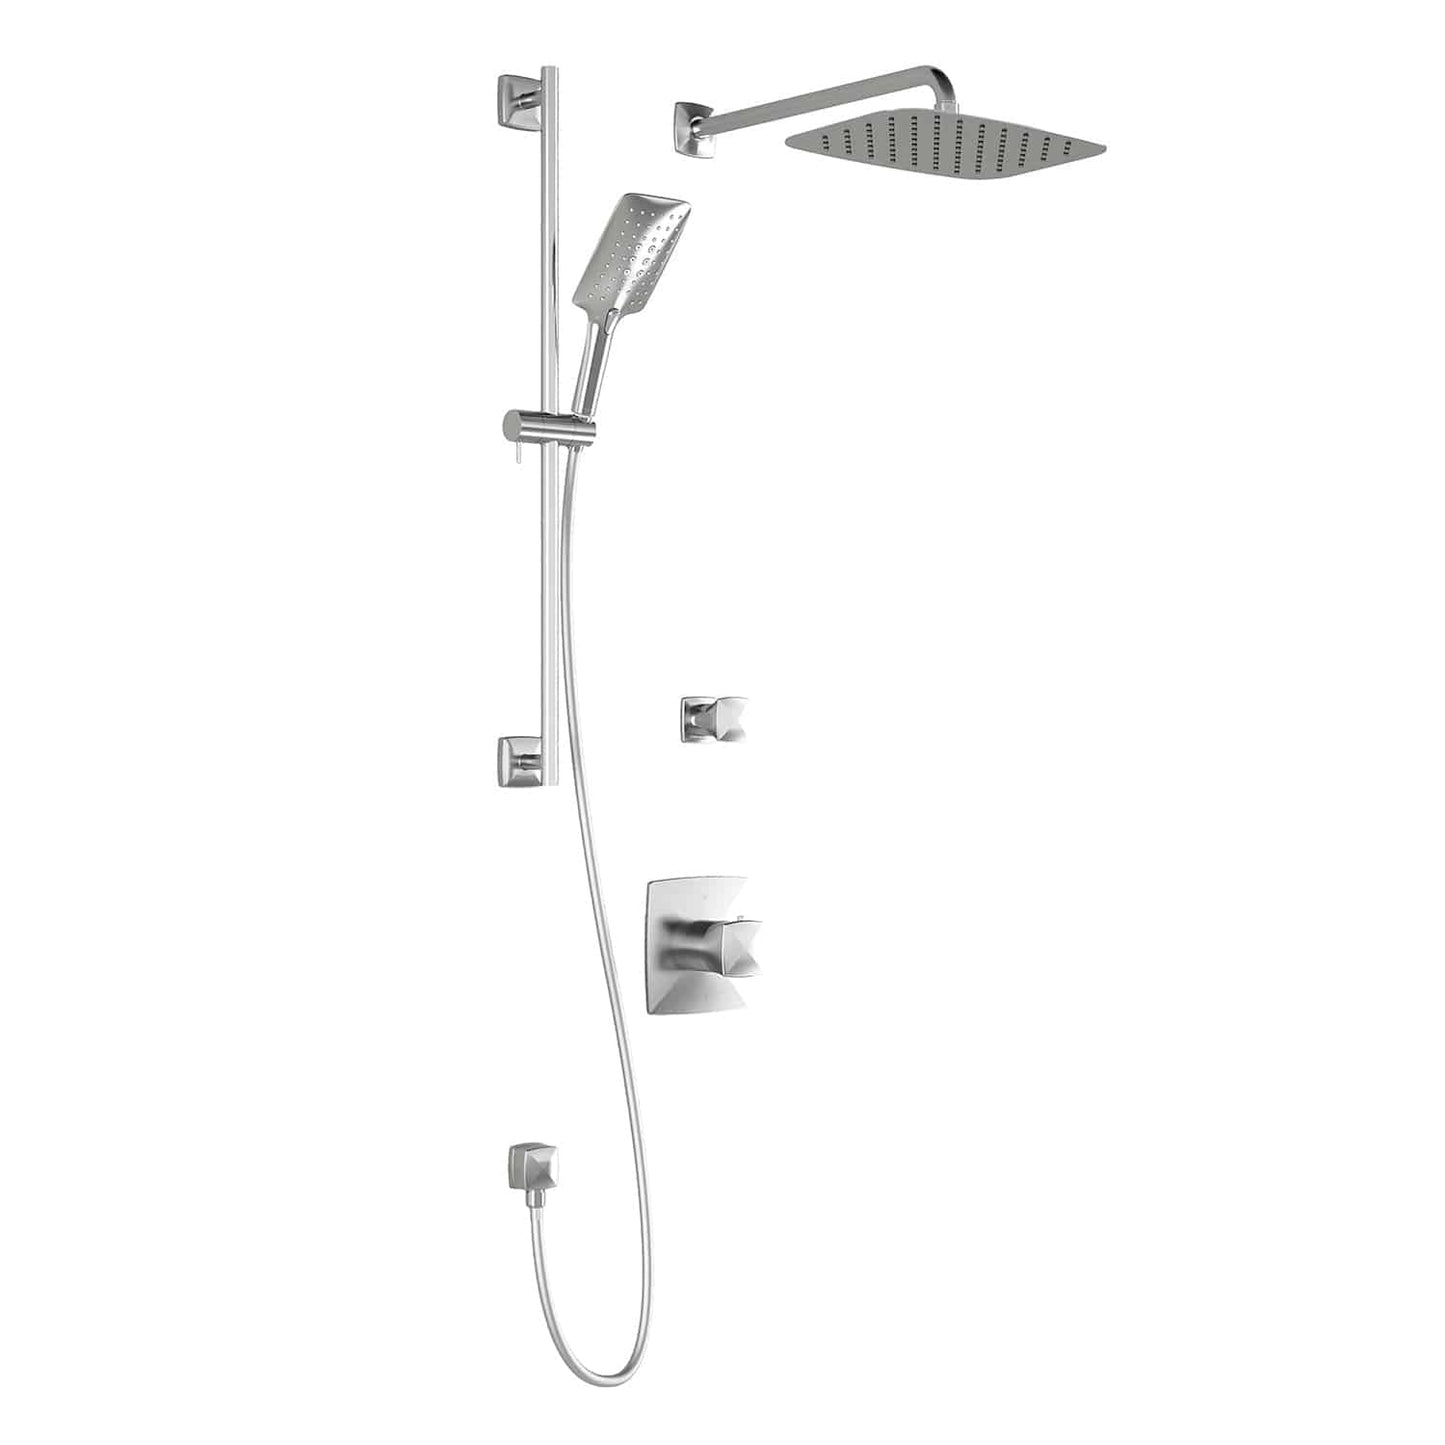 Kalia UMANI TD2 PREMIA AQUATONIK T/P Shower System with 11.75" Shower Head Hand Shower and Wall Arm- Chrome